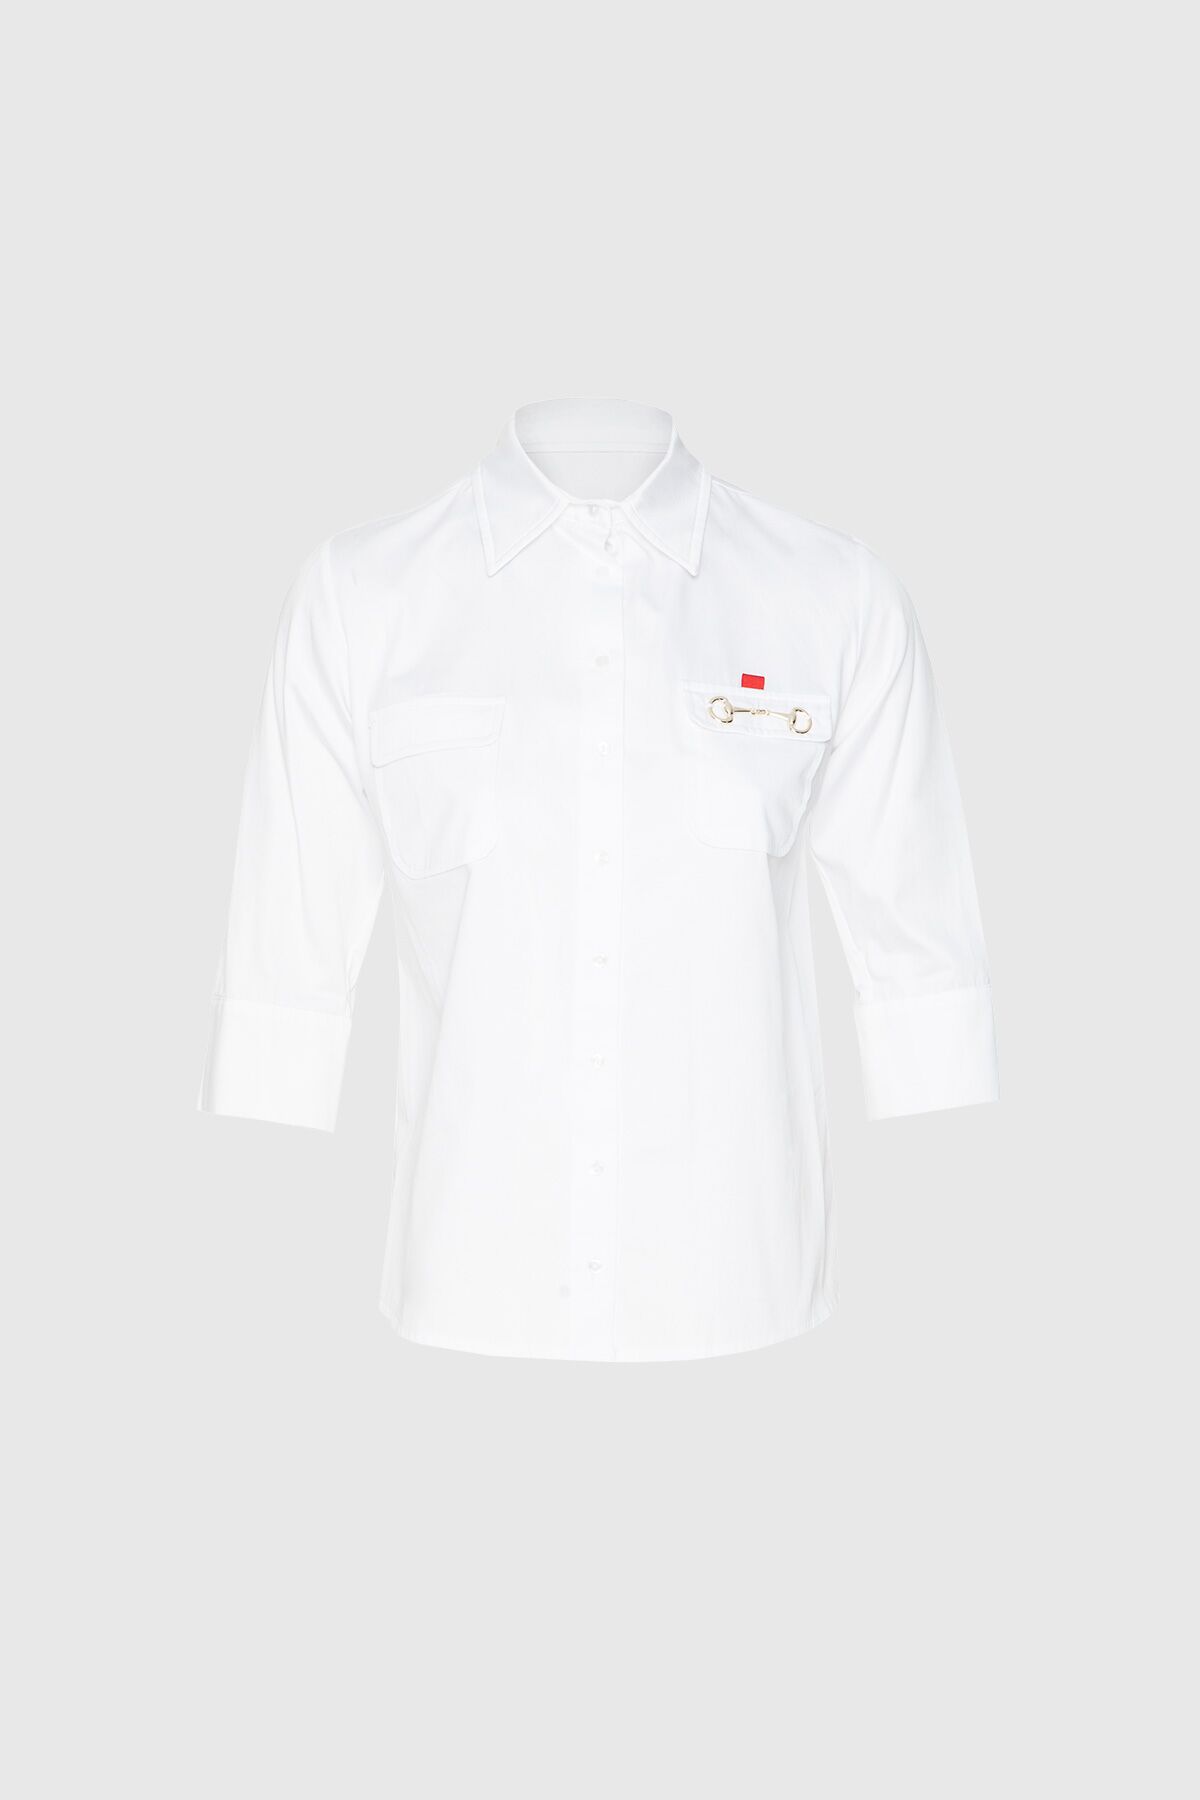 KIWE - Pocket Detailed White Shirt